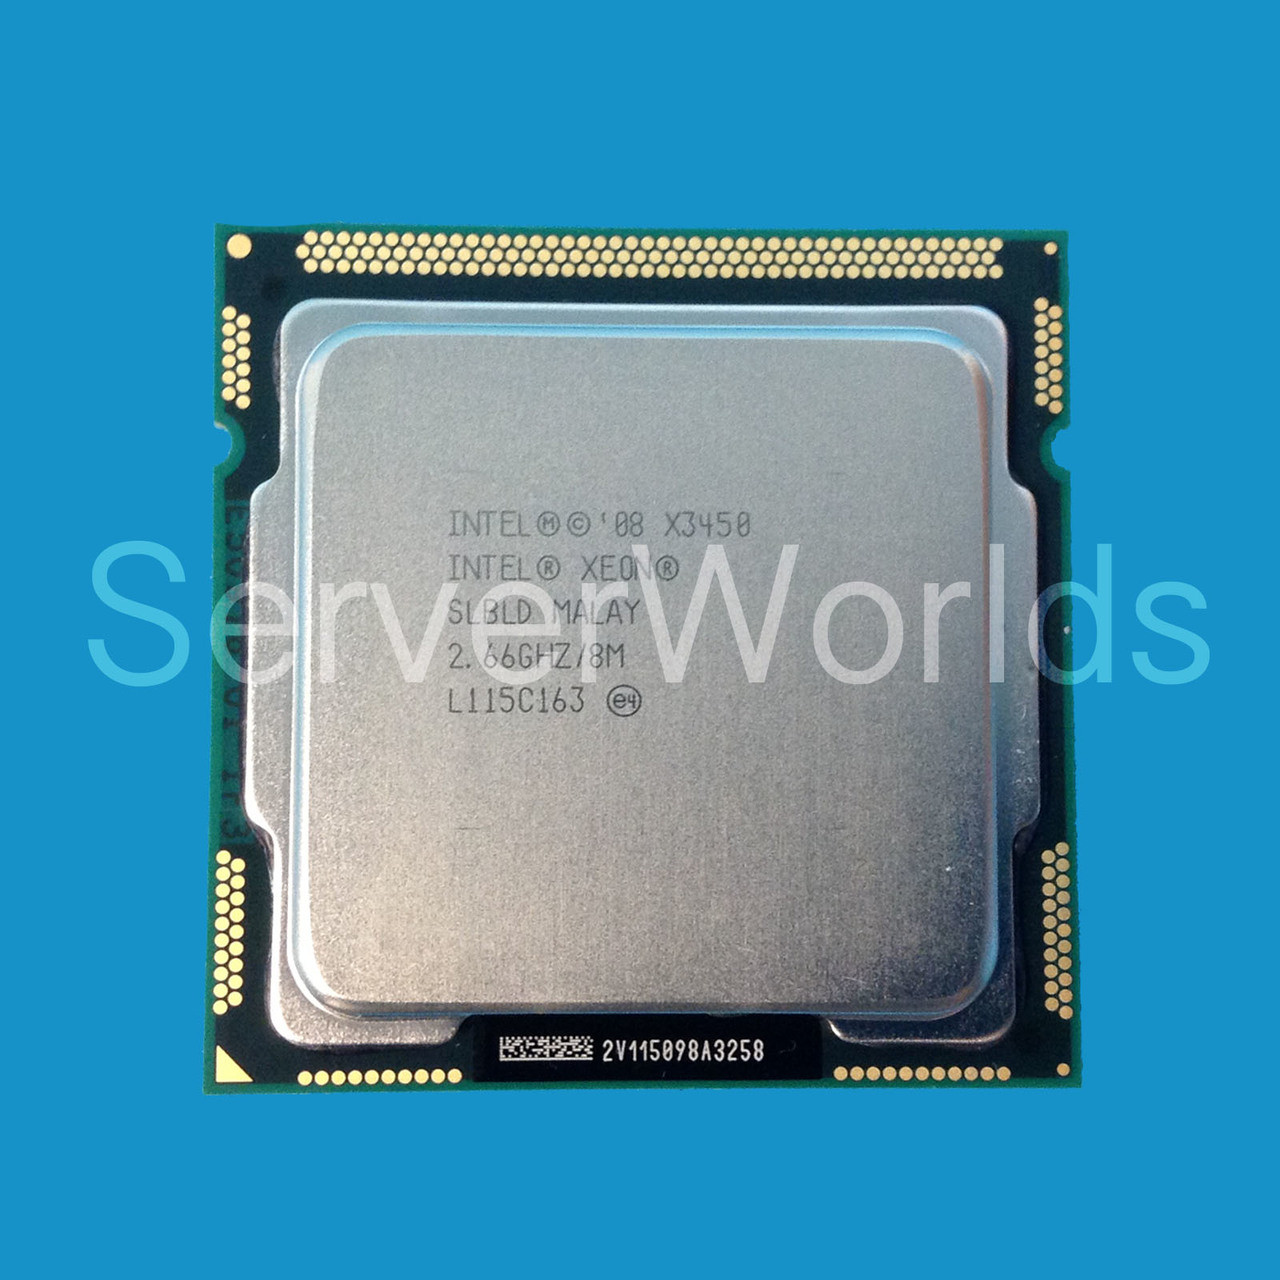 Intel SLBLD Xeon QC X3450 2.67GHz 8MB Processor